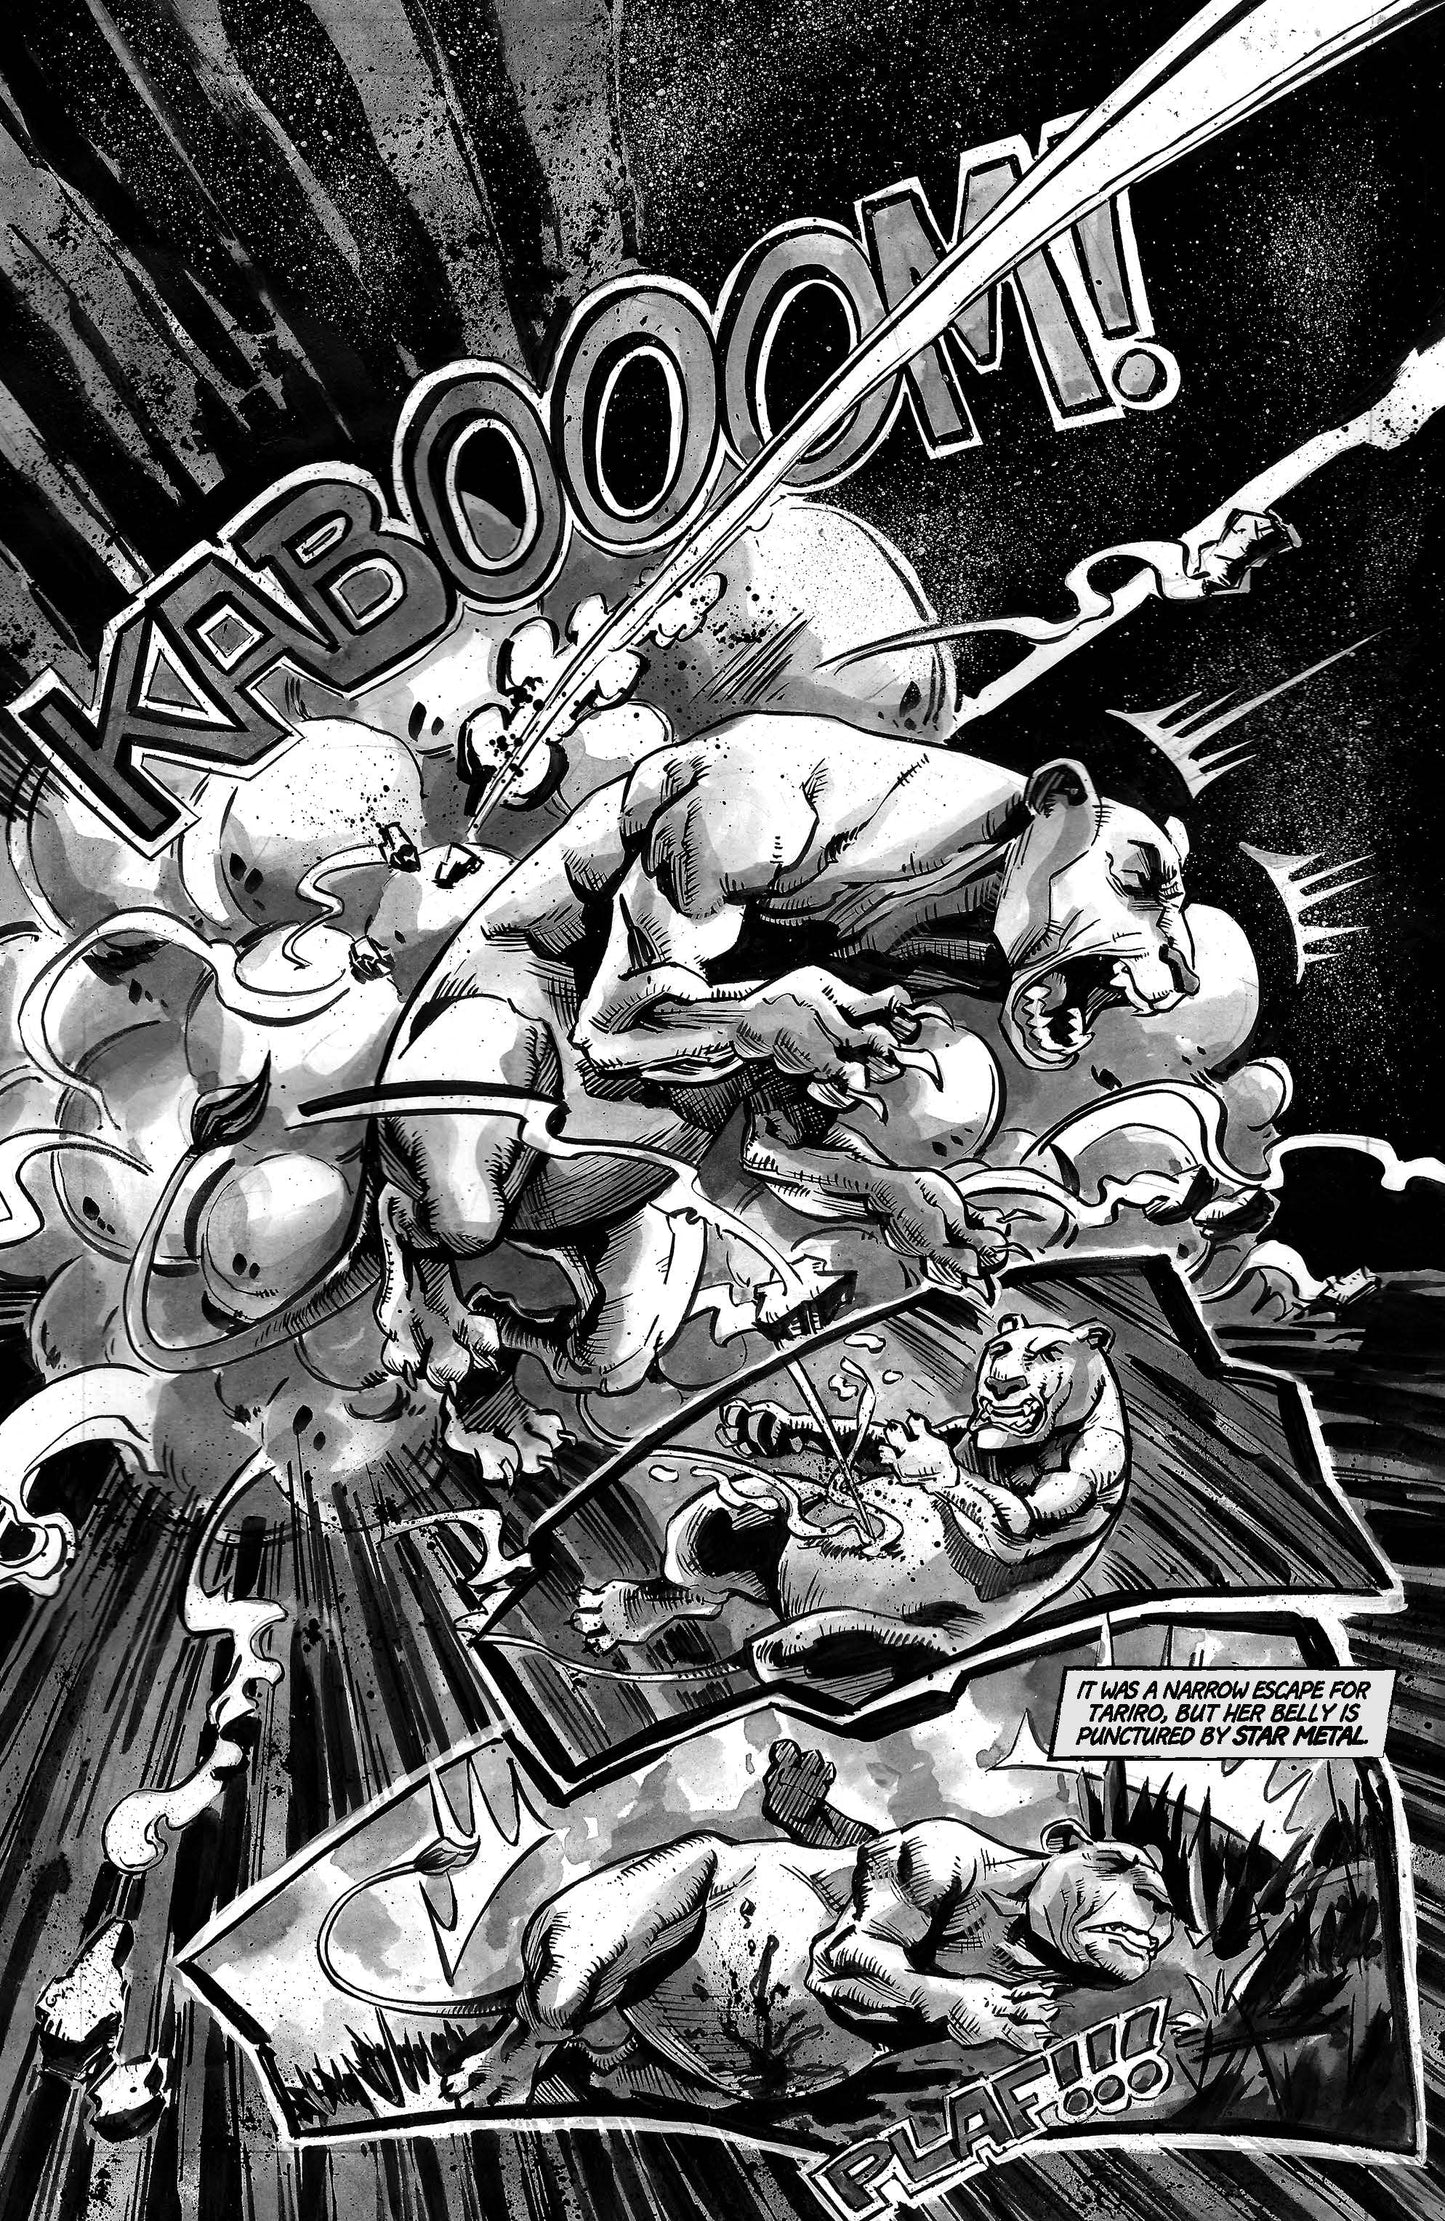 Koroo: The Black Lion Single Issue Bundle